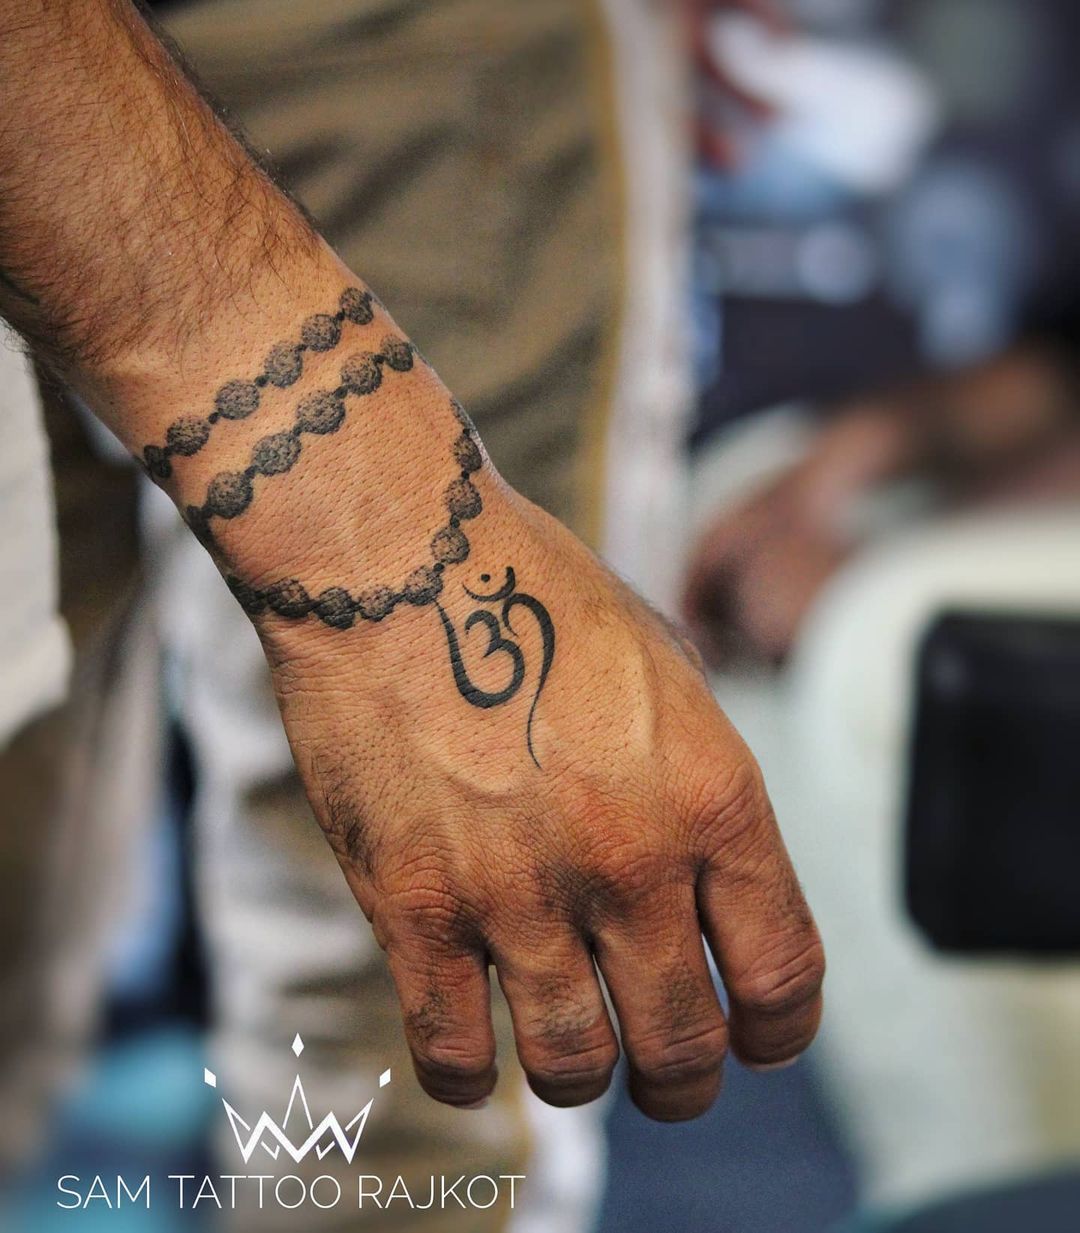 Lord Shiva Hand Tattoo Ideas | Mahadeva Tattoo on Hand. - TiptopGents